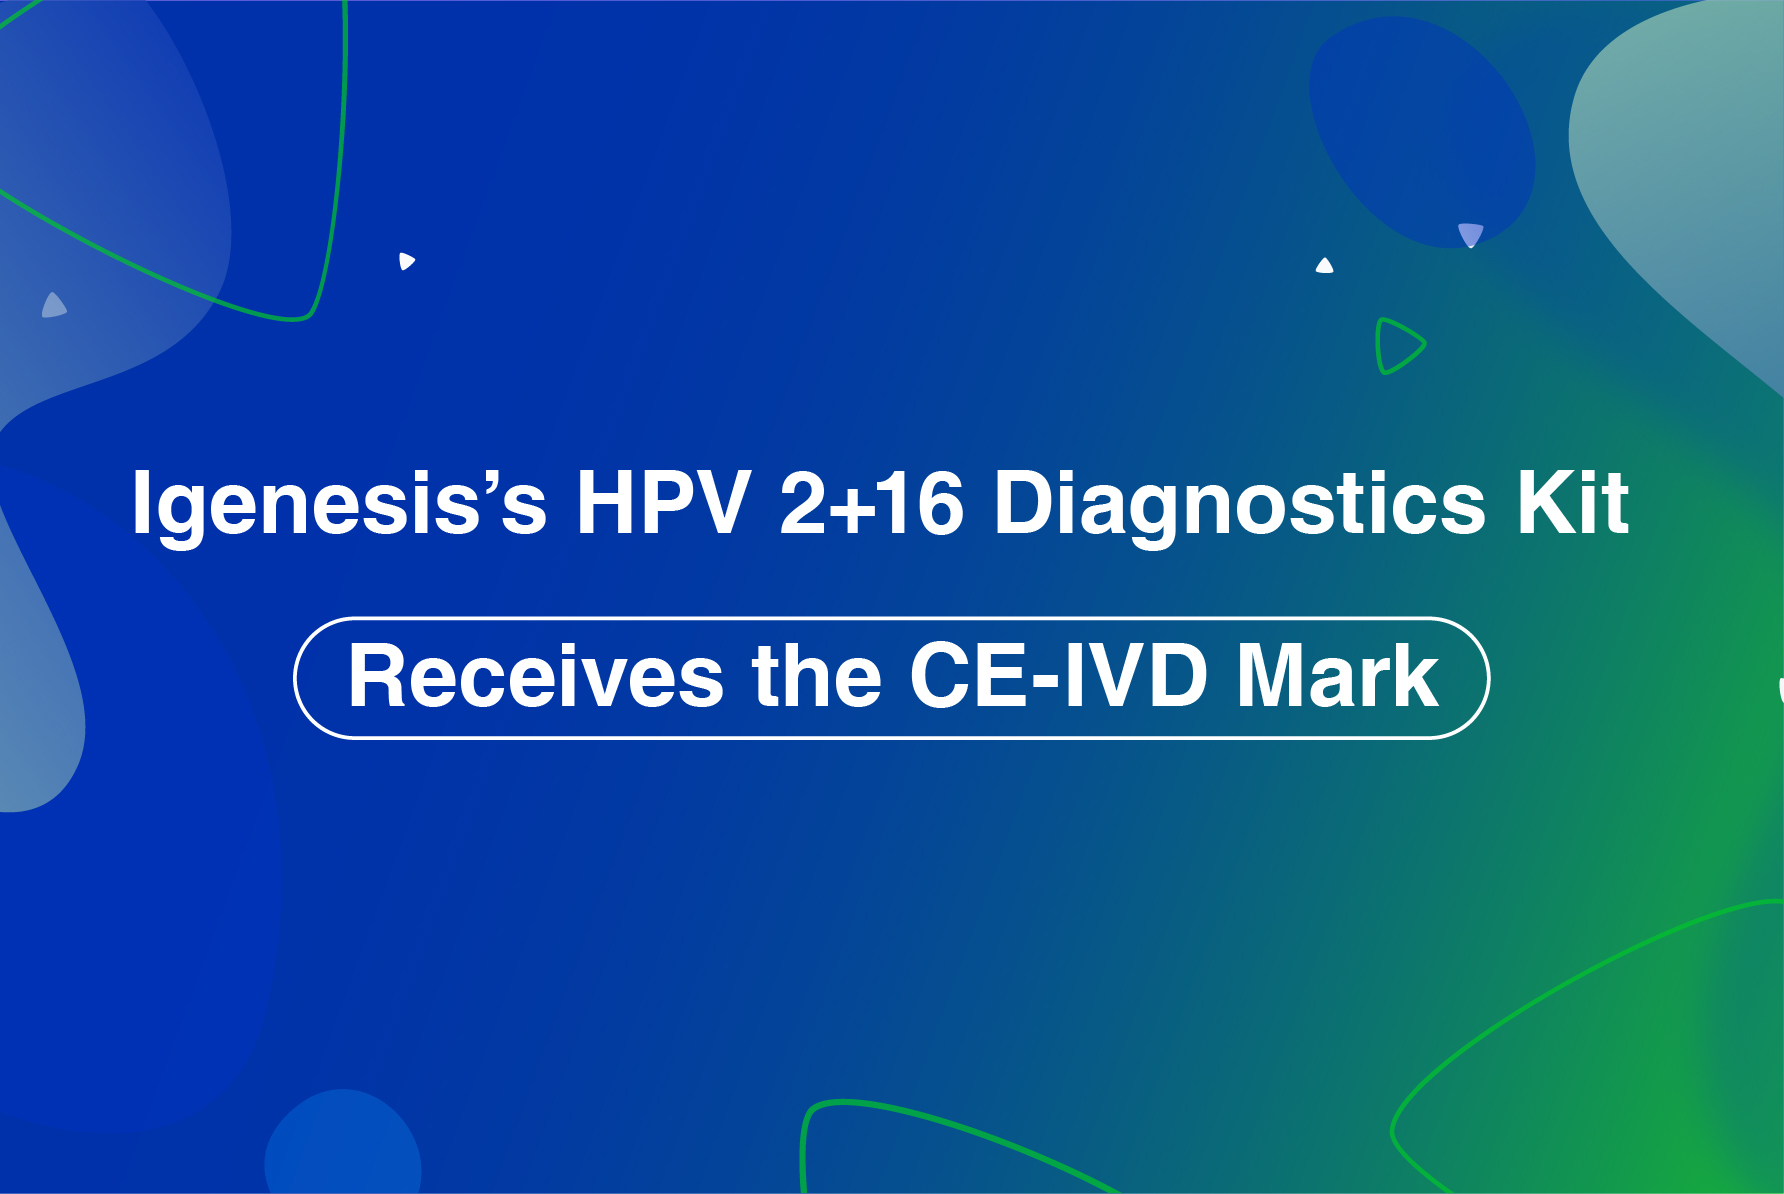 Igenesis’s HPV 2+16 Diagnostics Kit Receives the CE-IVD Mark